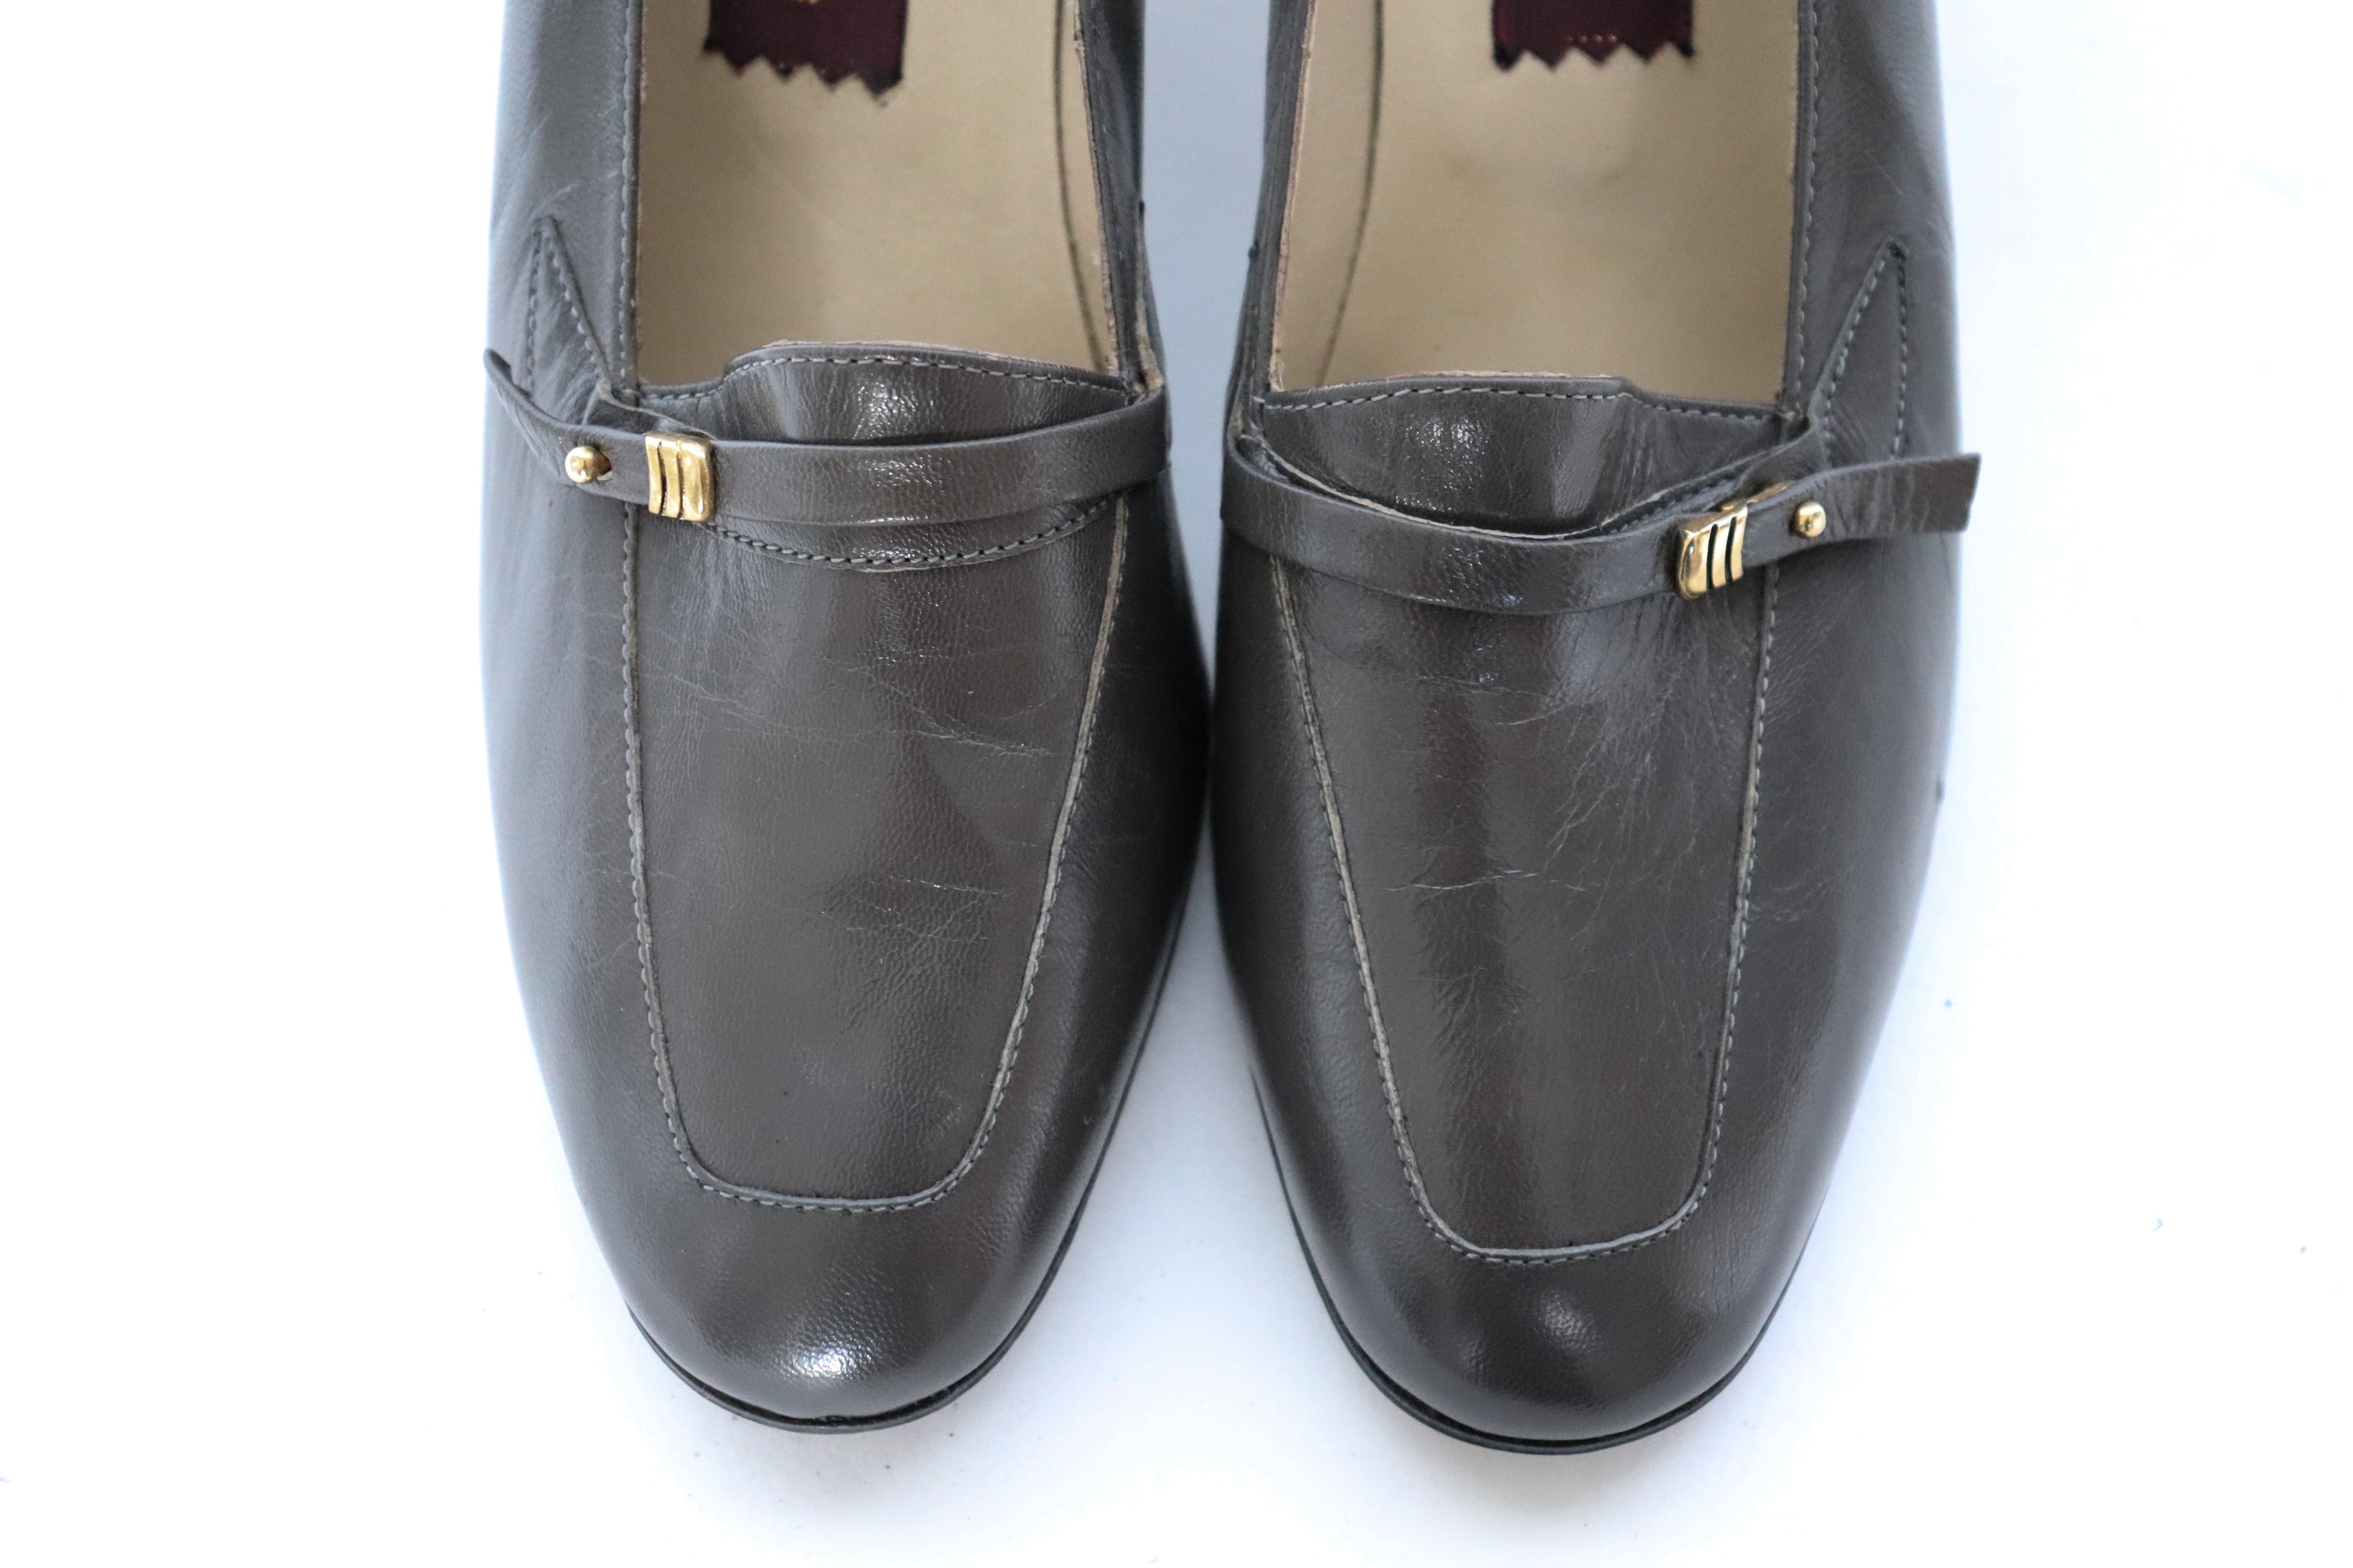 Vintage Heel Loafers - 1980s Grey Leather - Mimosa - UK 3.5 / 36.5 - UNWORN